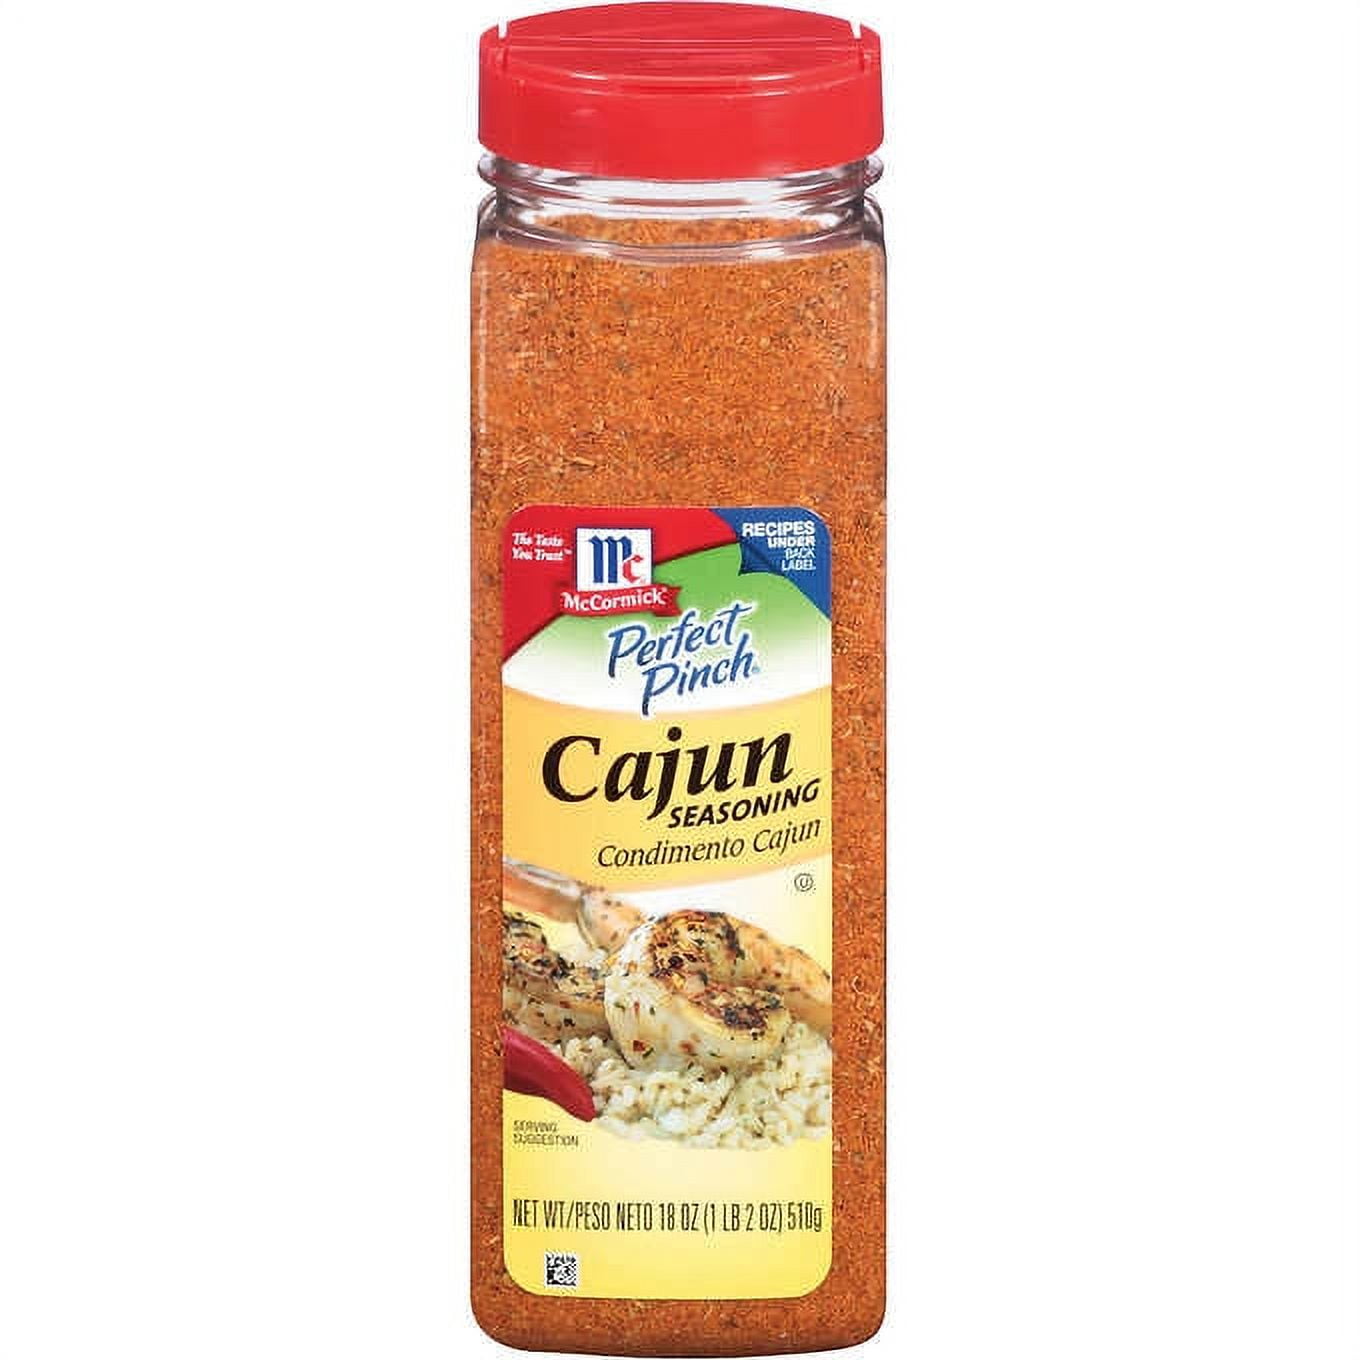 McCormick Culinary Cajun Seasoning, 18 oz - One 18 Ounce Container of Cajun  Seasoning Mix, Made to Enhance Catfish, Crawfish, Jambalaya, Gumbo and More  1.12 Pound (Pack of 1)